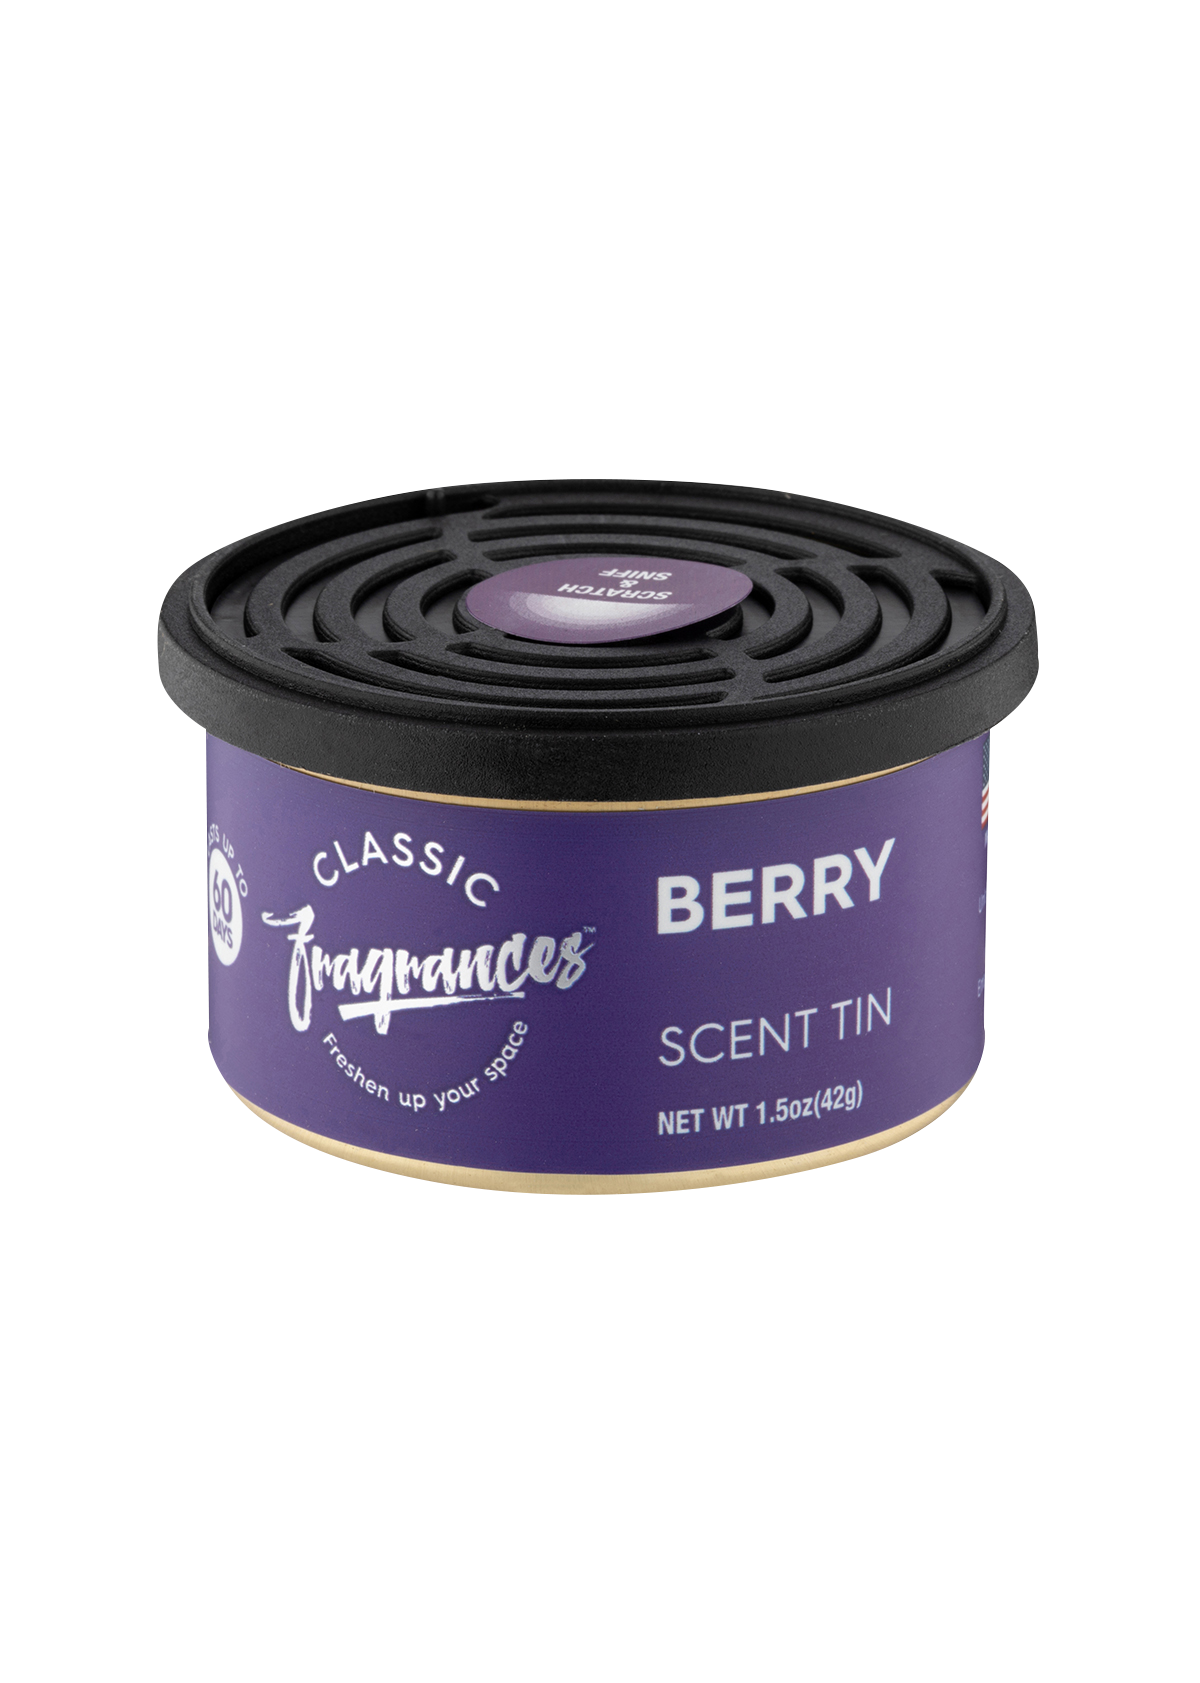 Berry Scent Tin